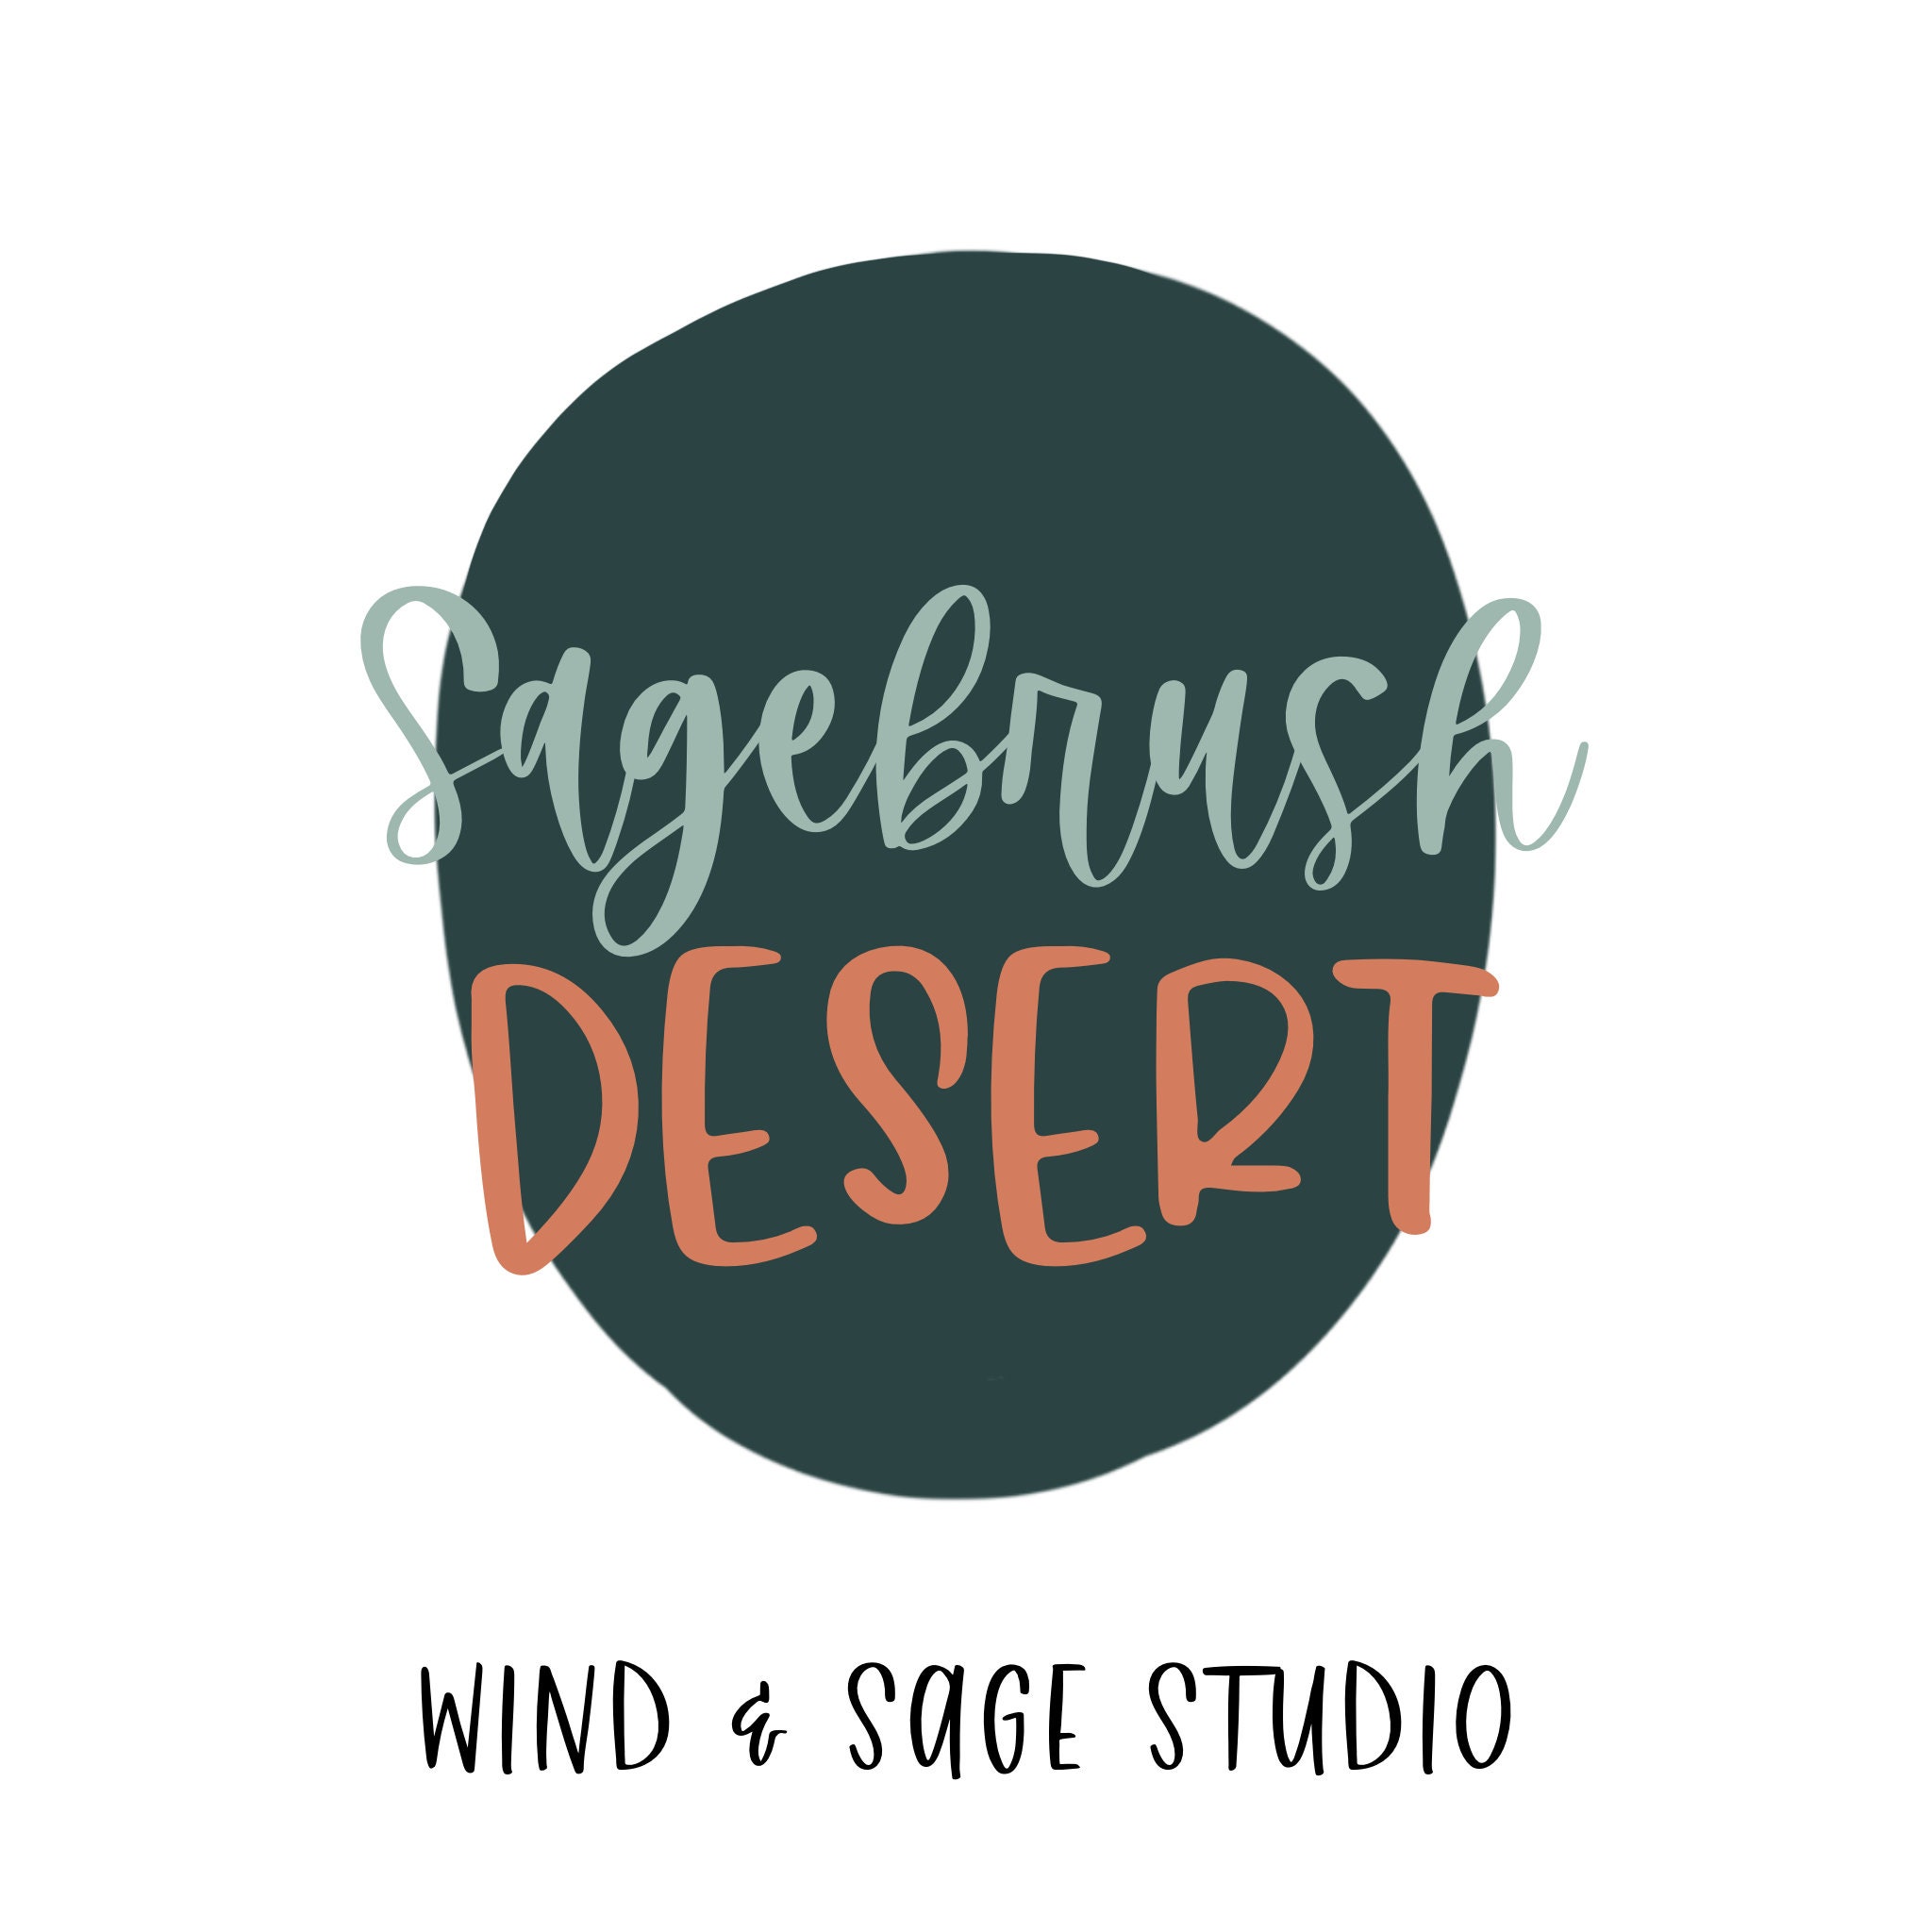 Desert wind studios